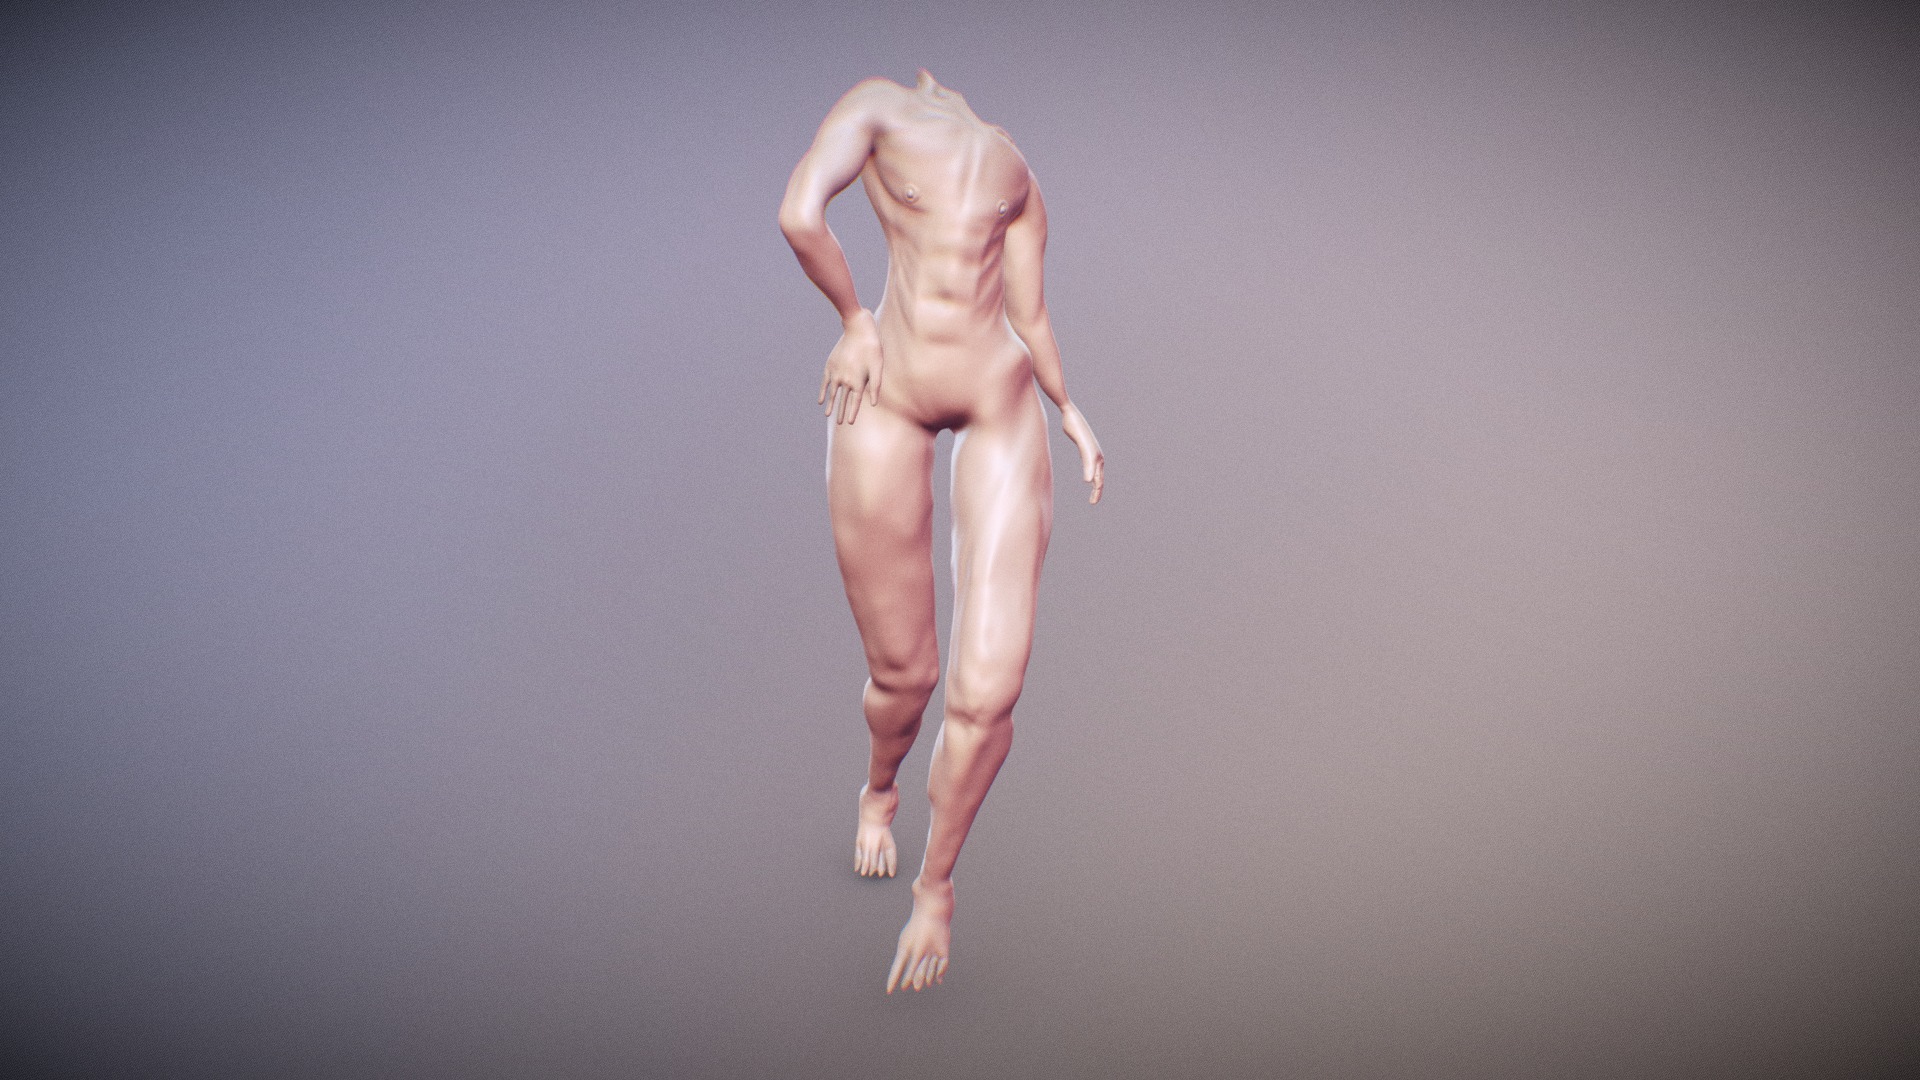 Headless female figure